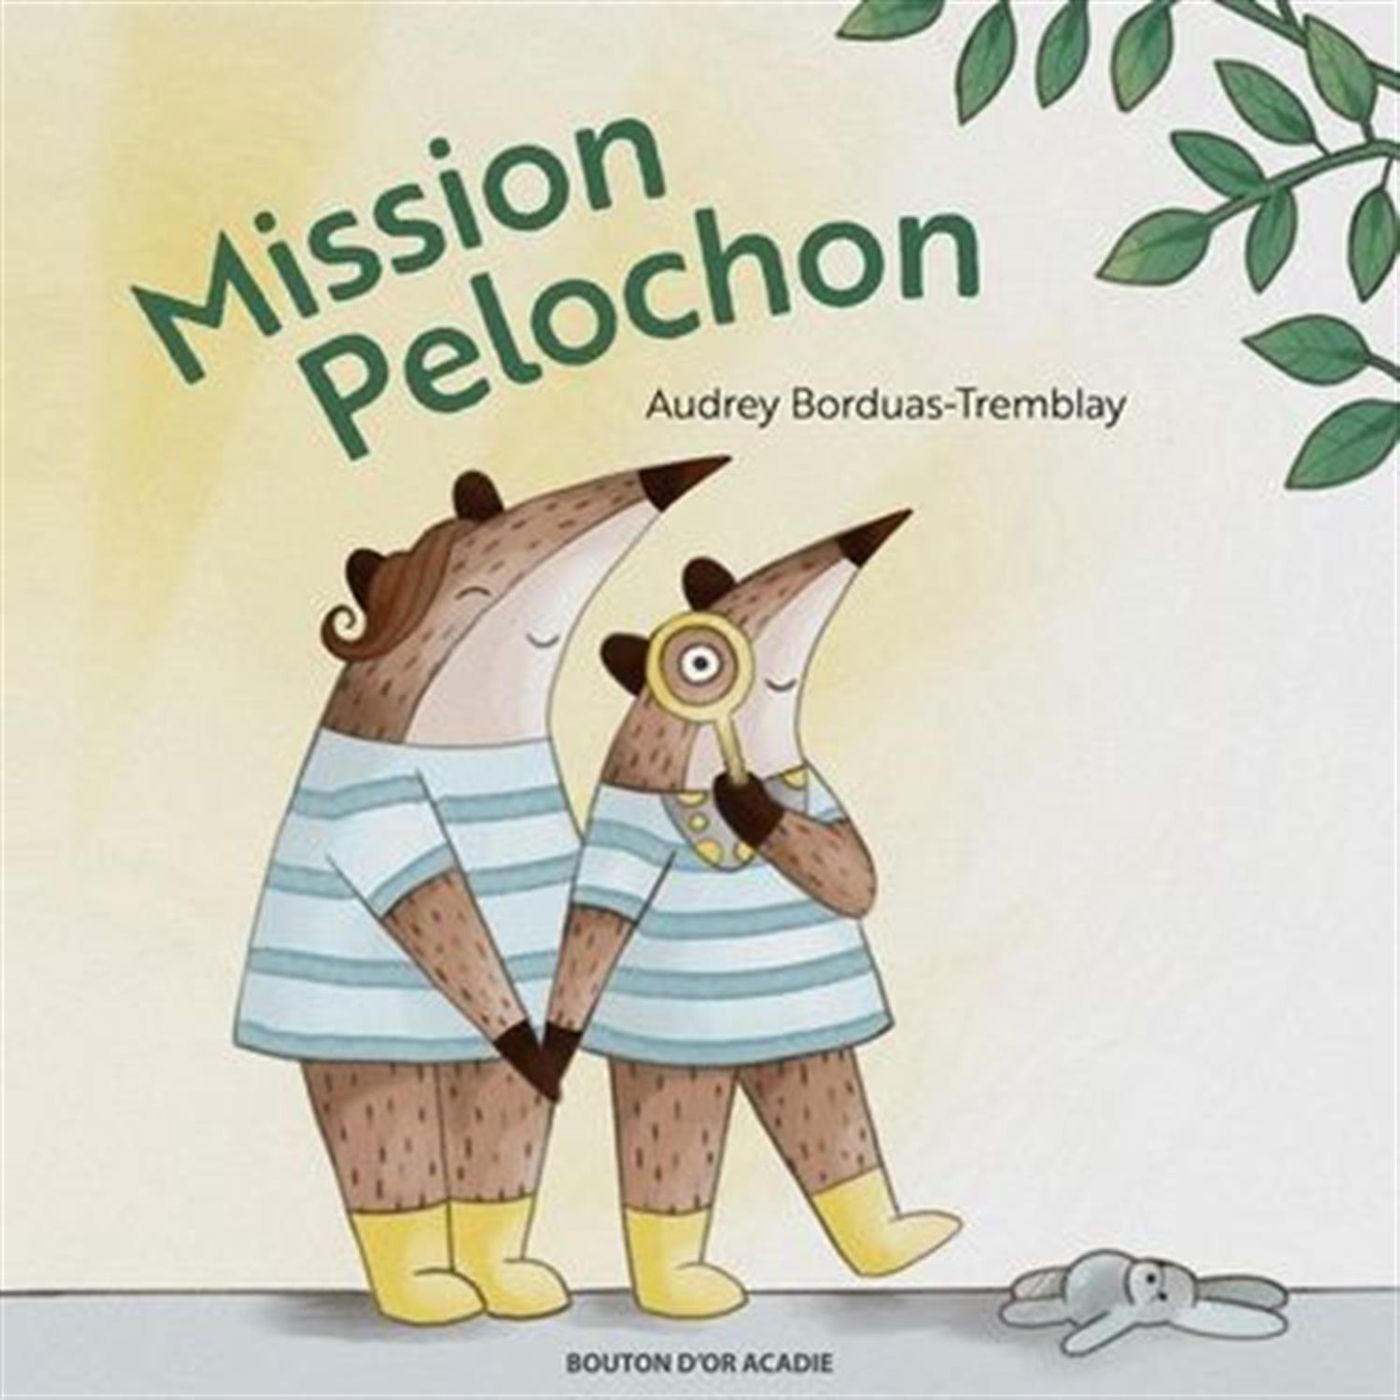 Jo-Anne Elder Reviews Mission Pelochon